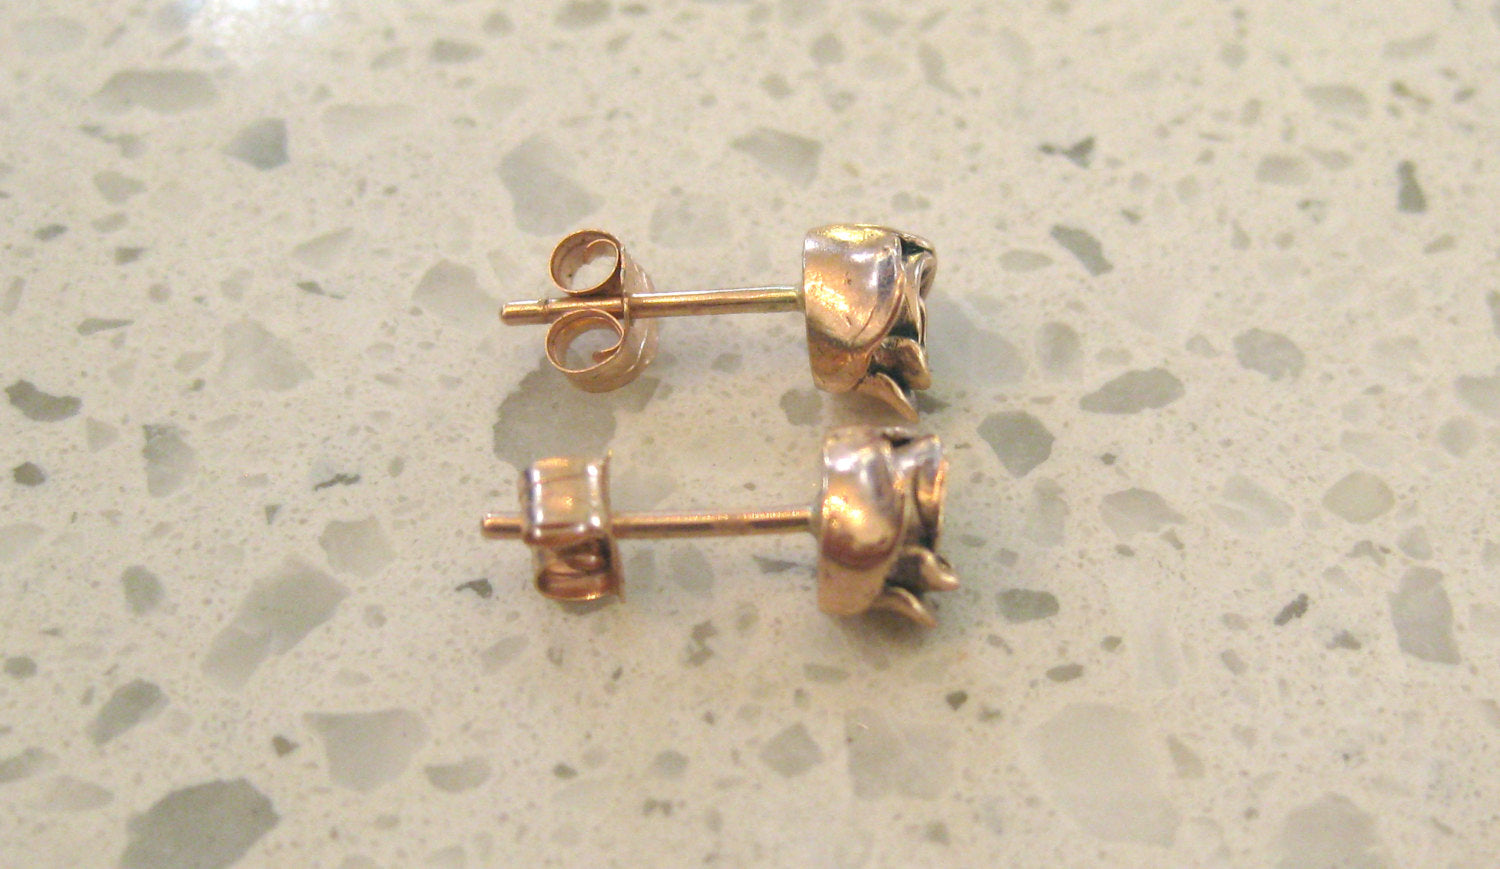 small rose stud earrings, tiny rosebud studs, delicate earrings, dainty studs, everyday earrings